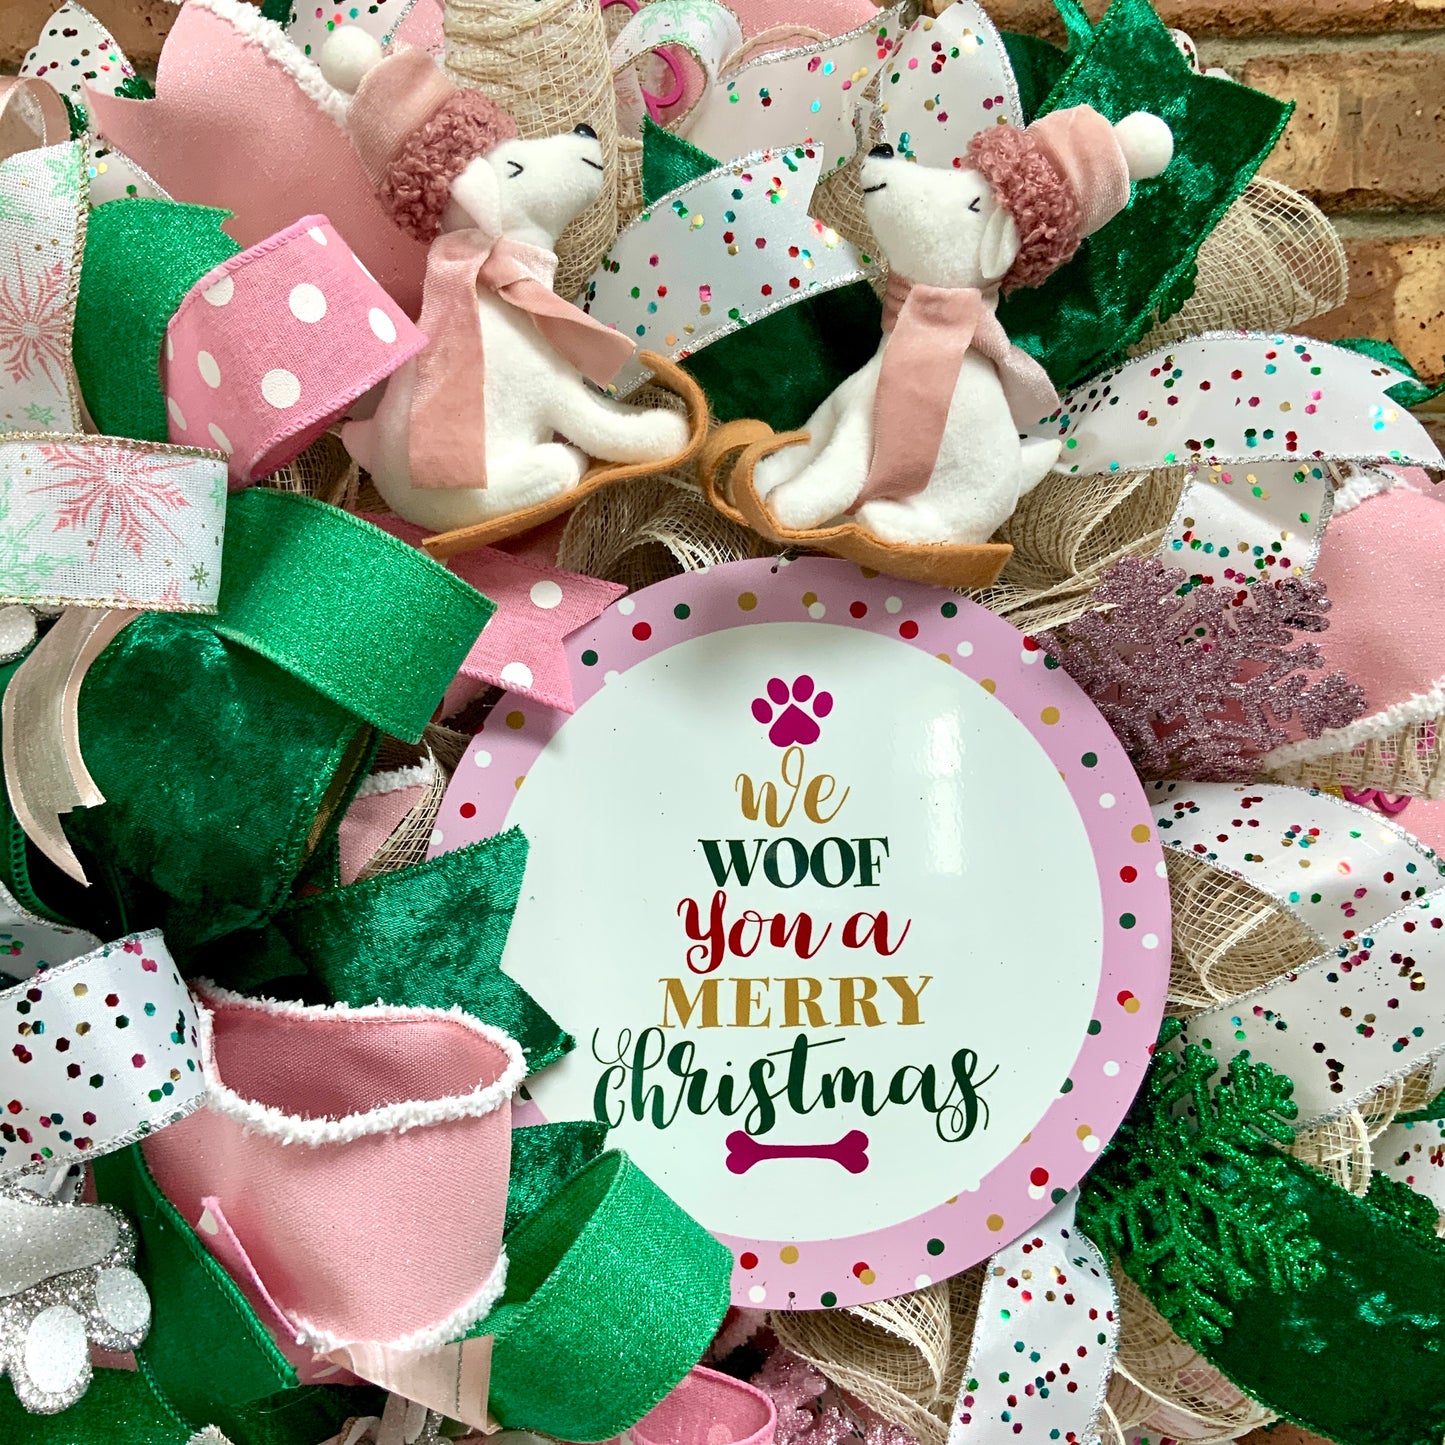 We Woof You A Merry Christmas, Christmas Dog Wreath, Holiday Dog Wreath, Christmas Pet Wreath, Santa Paws Wreath, Dog Wreath